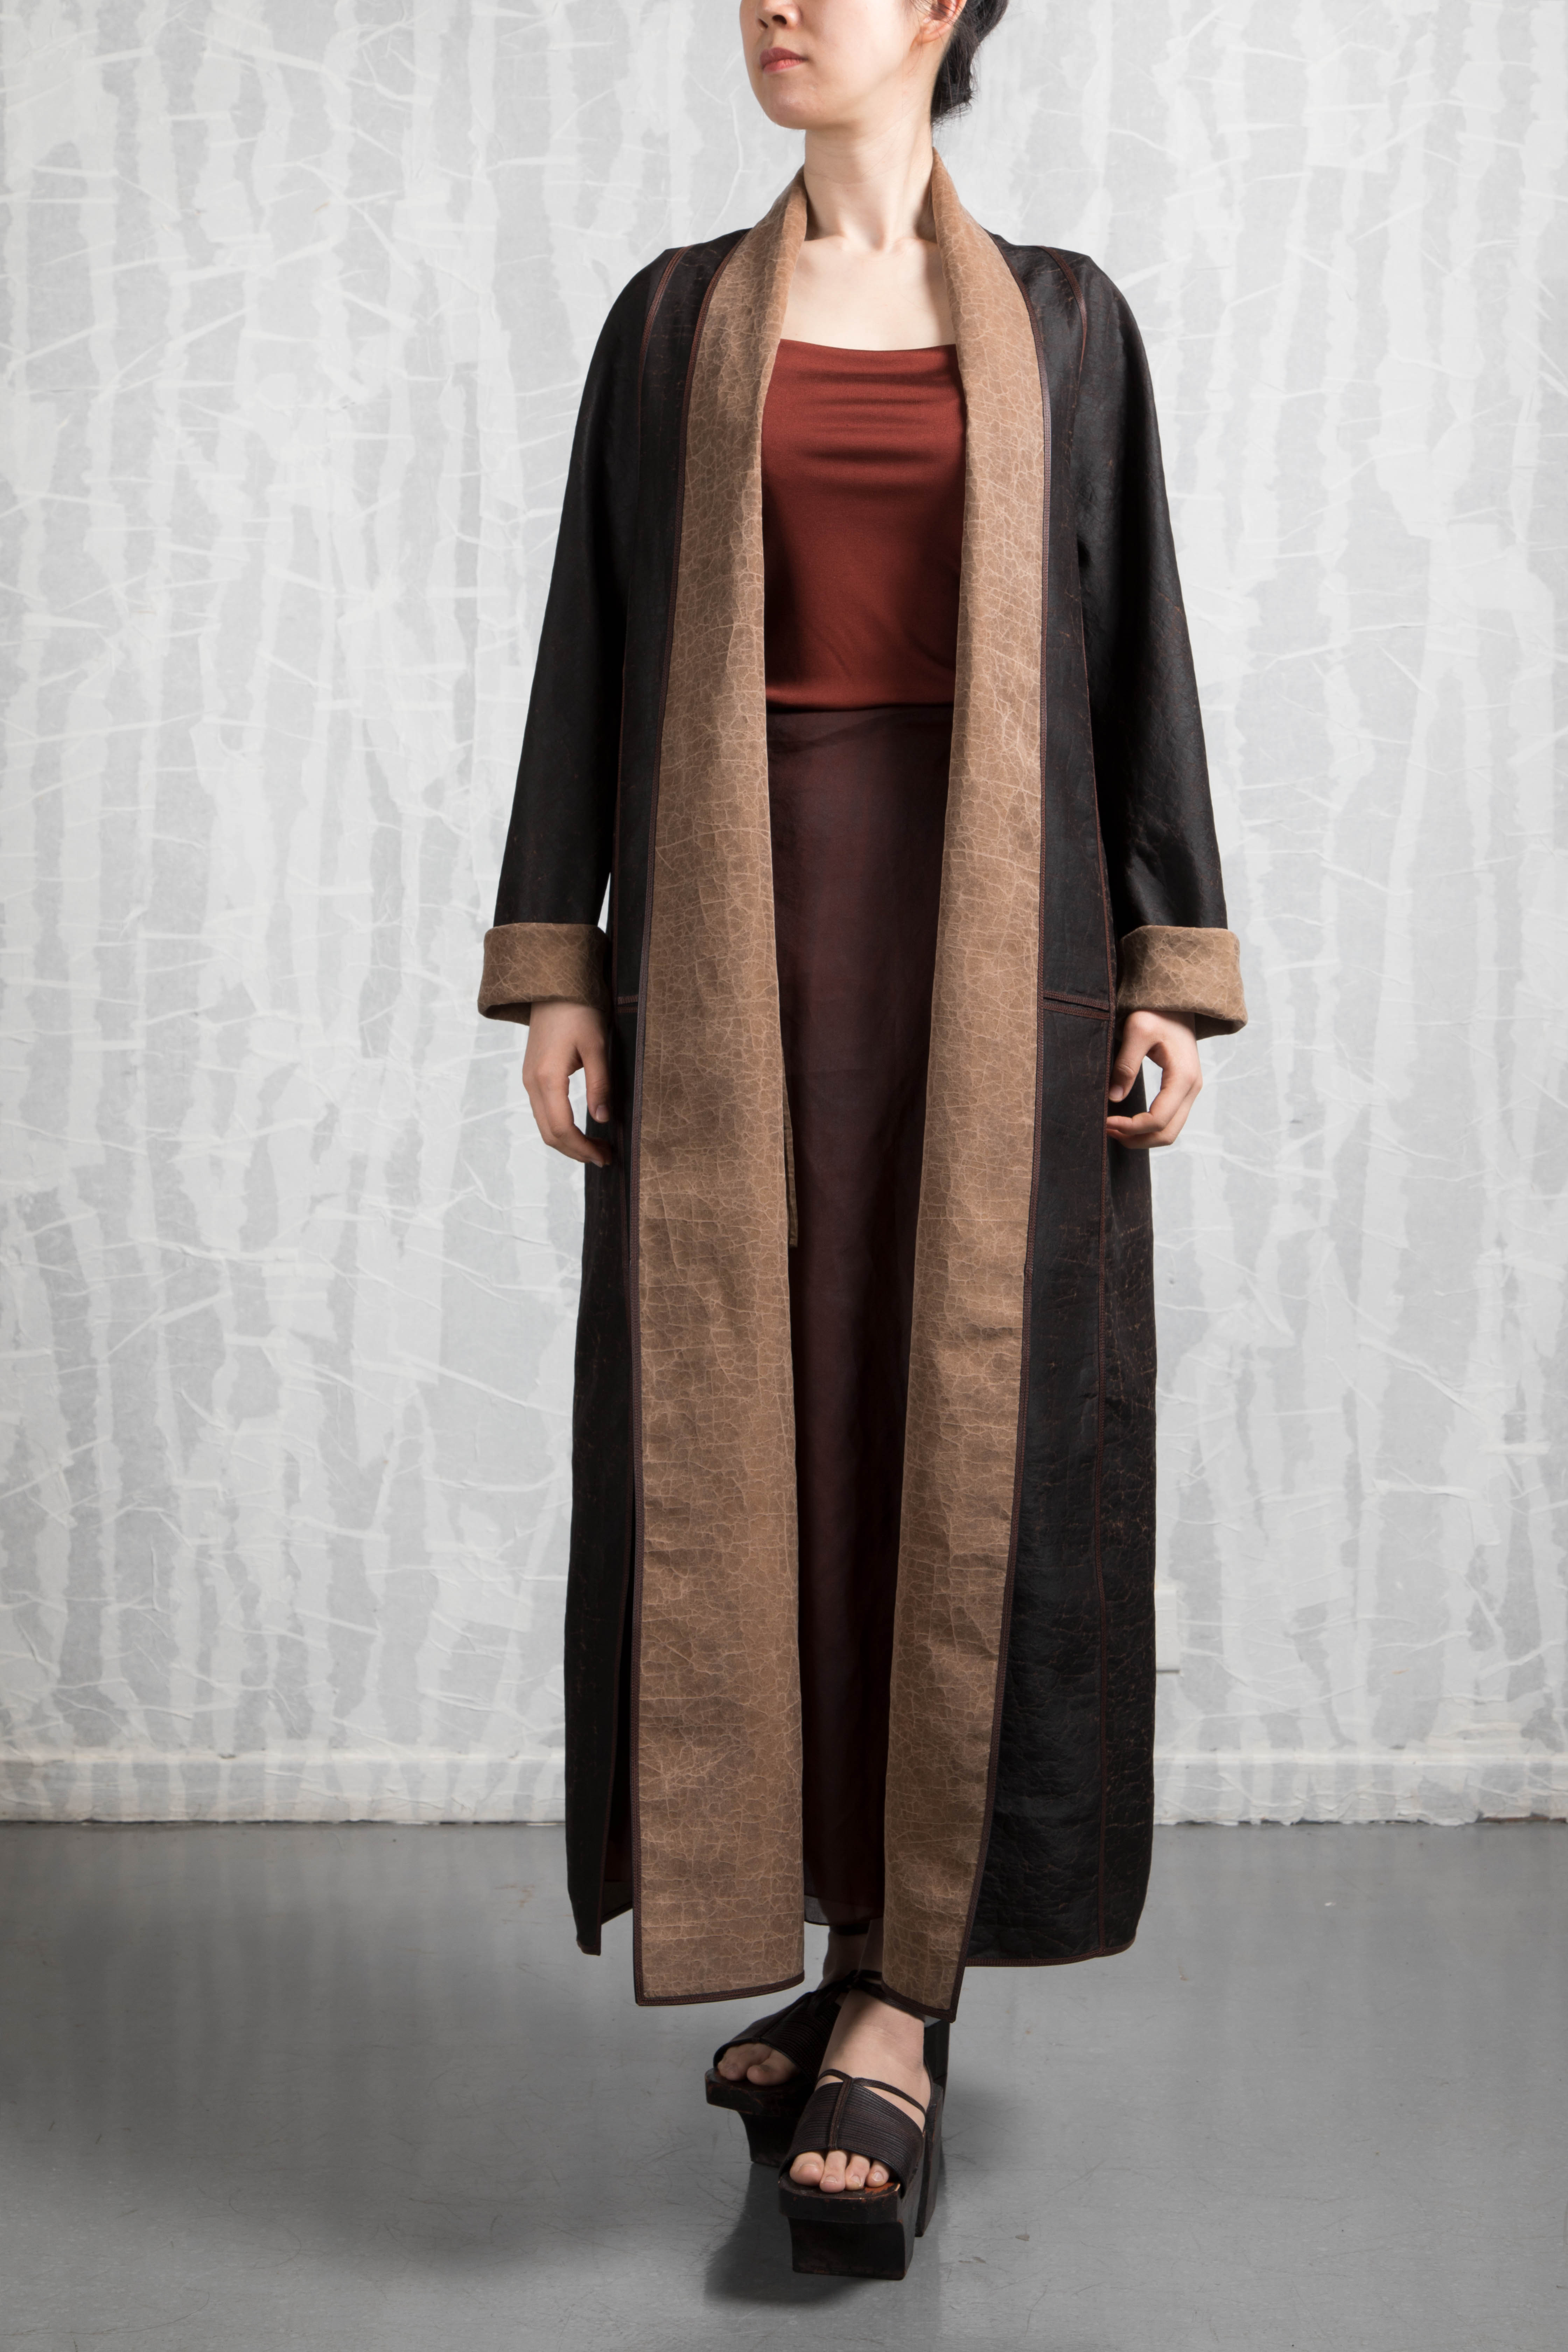 revesible teasilk wrap dress-coat with leather trim